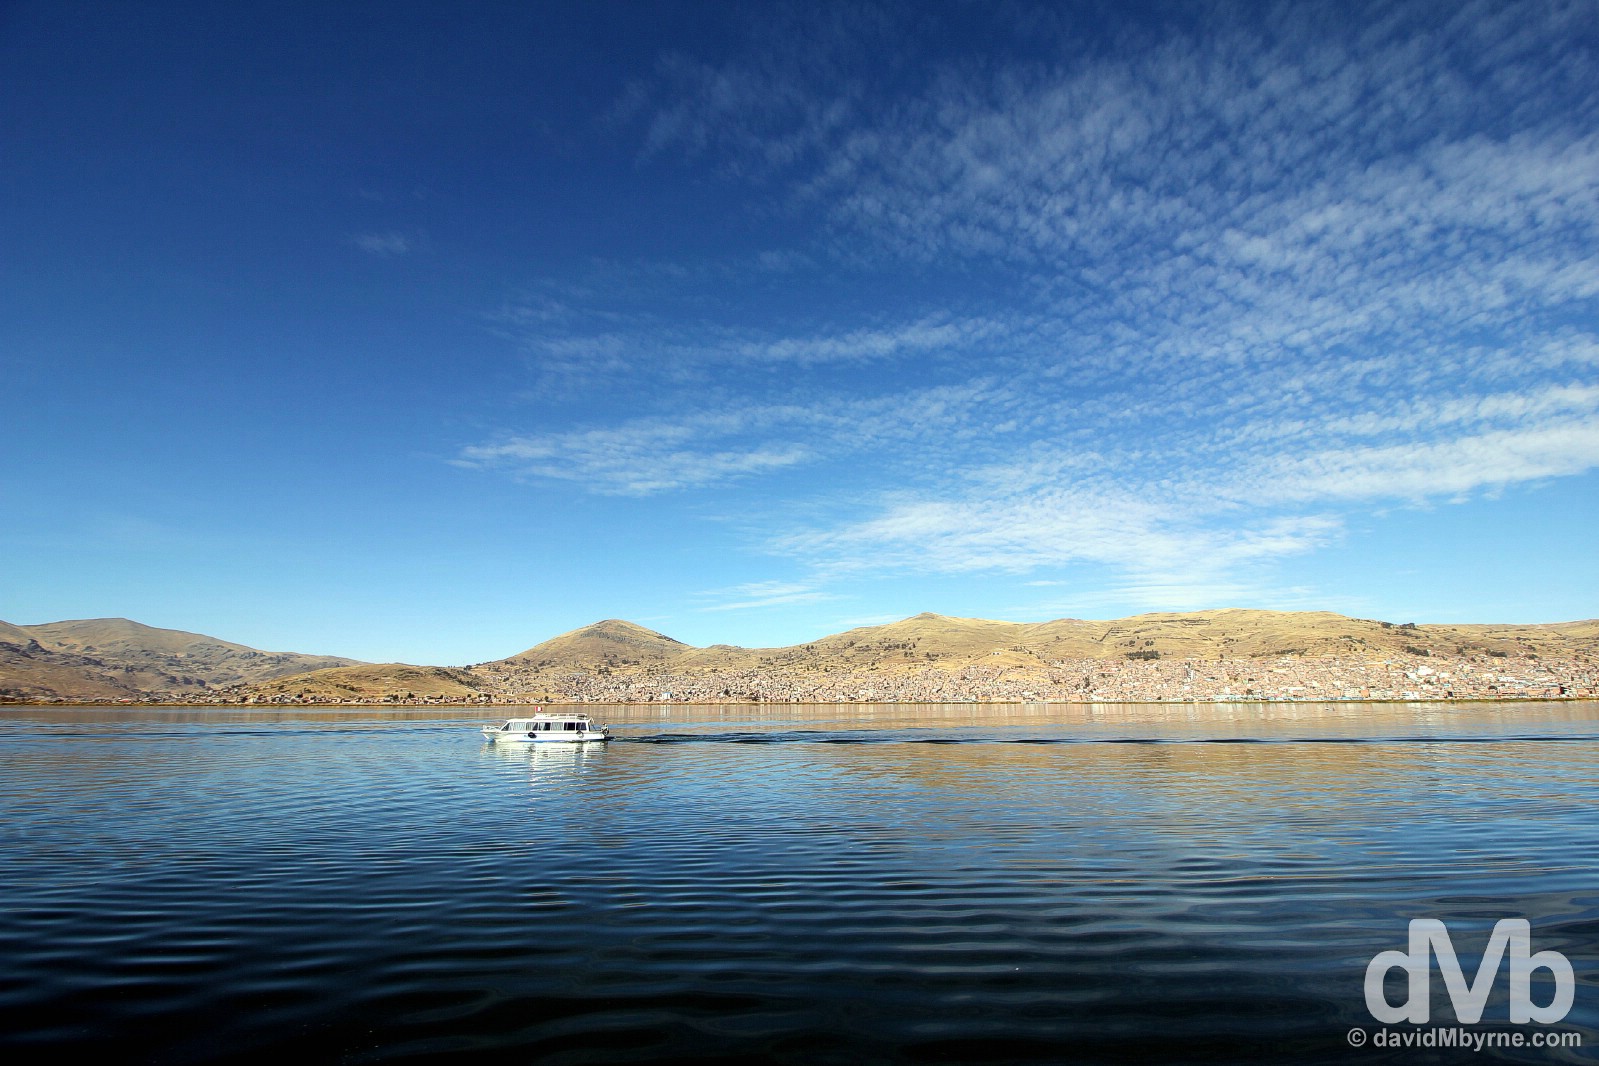 Boating on Lake Titicaca outside Puno, Peru. August 20, 2015. 